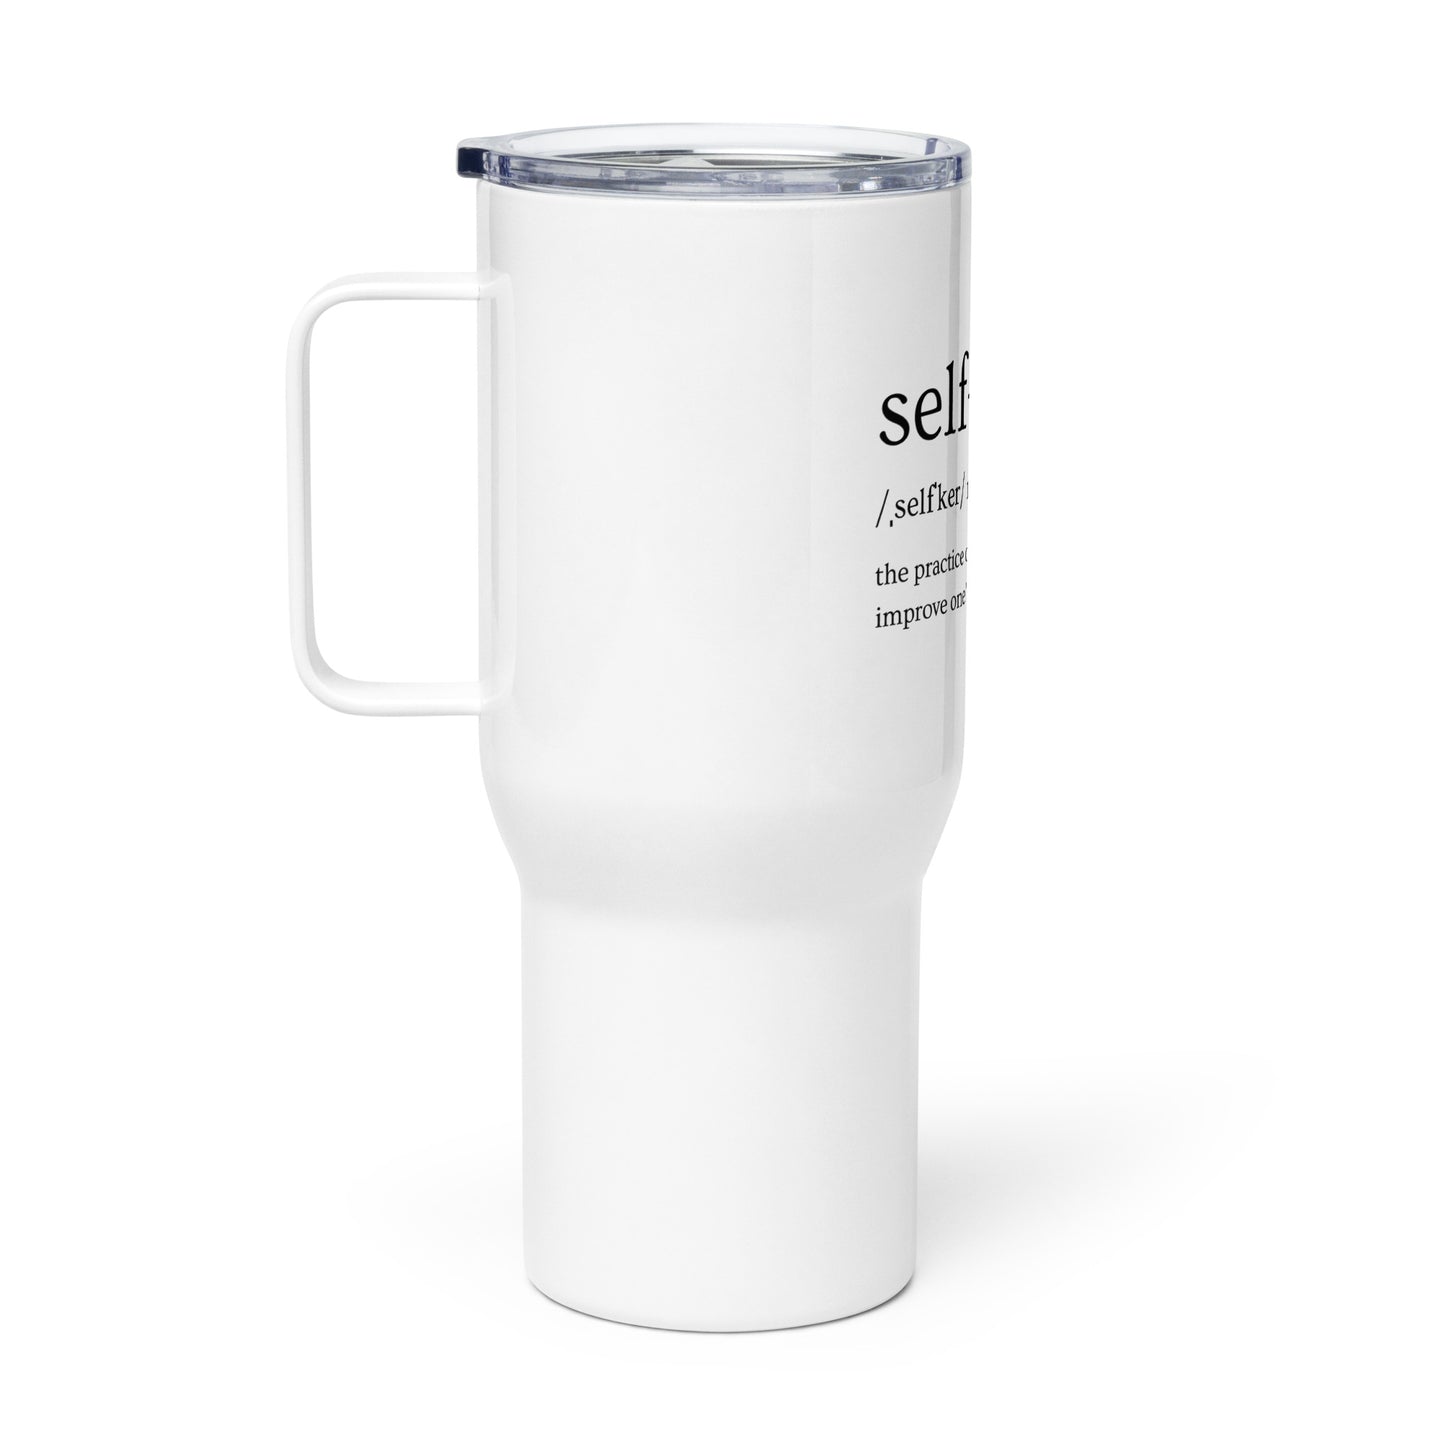 Self Care Travel mug with a handle